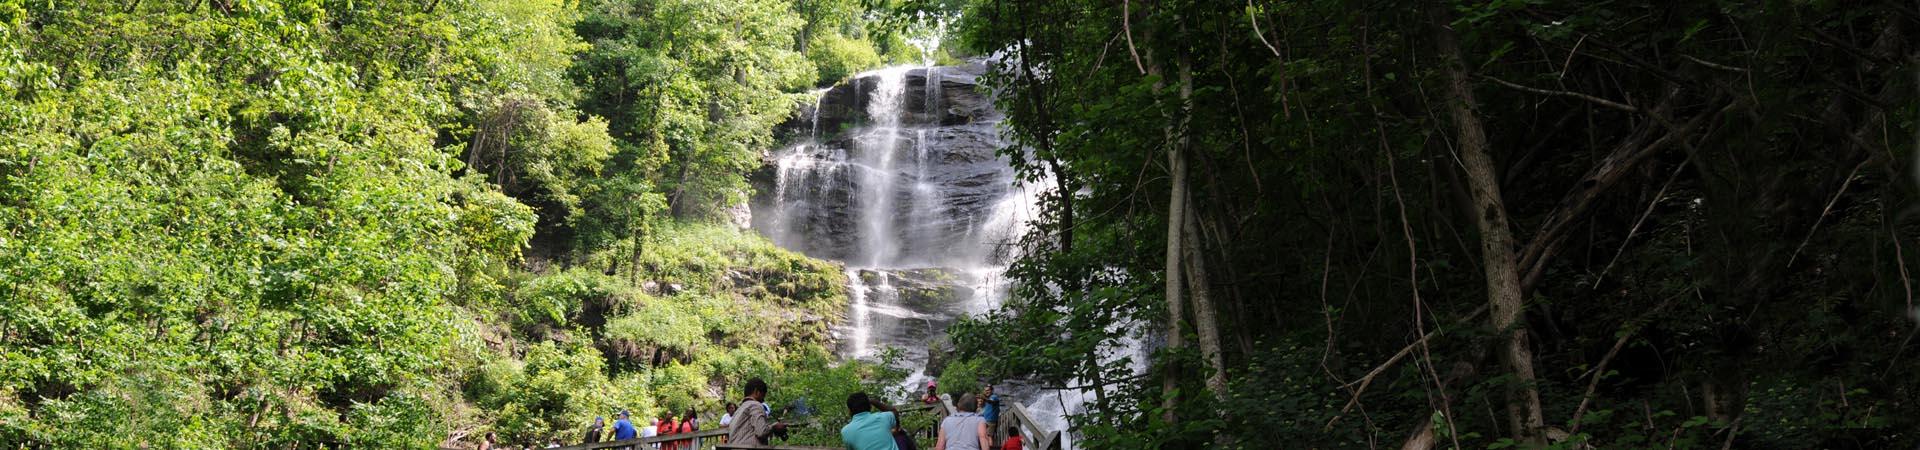 Amicalola Falls picture